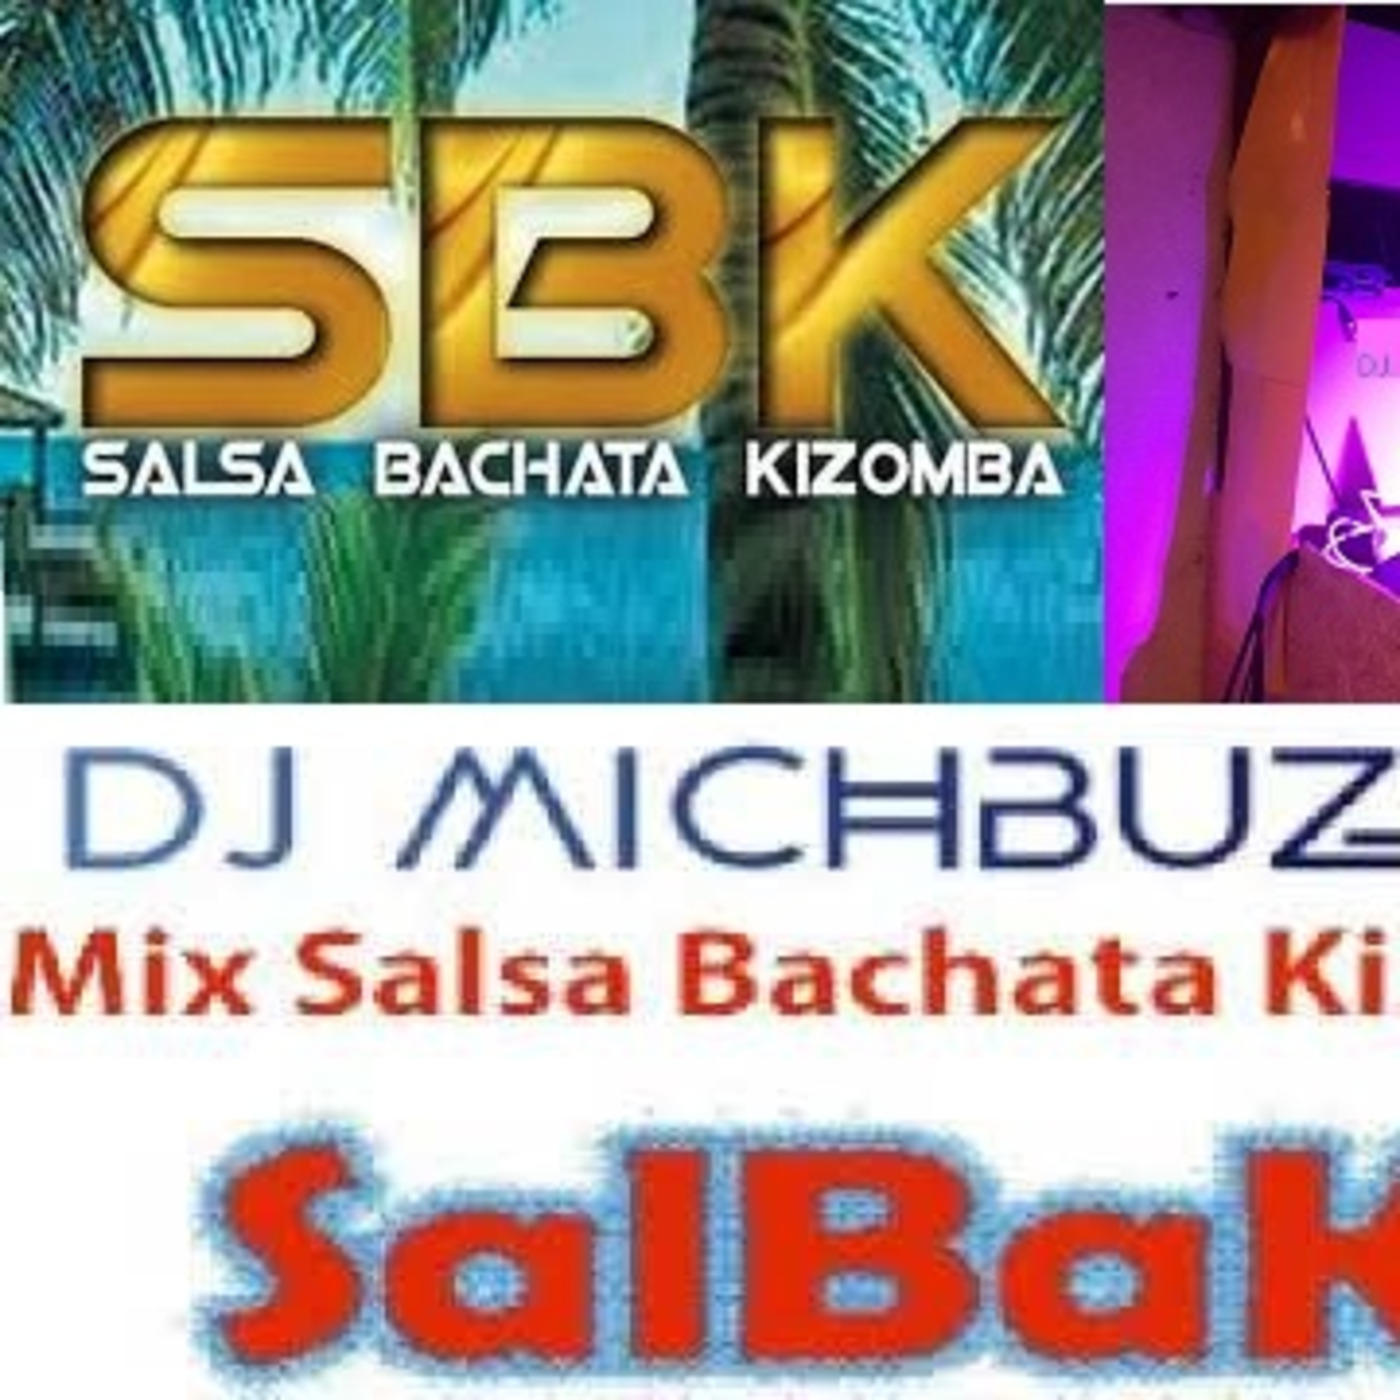 DJ michbuze - Mix SBK (Salsa Bachata Kizomba) Salbakiz Los 33 Bordeaux 2022-192